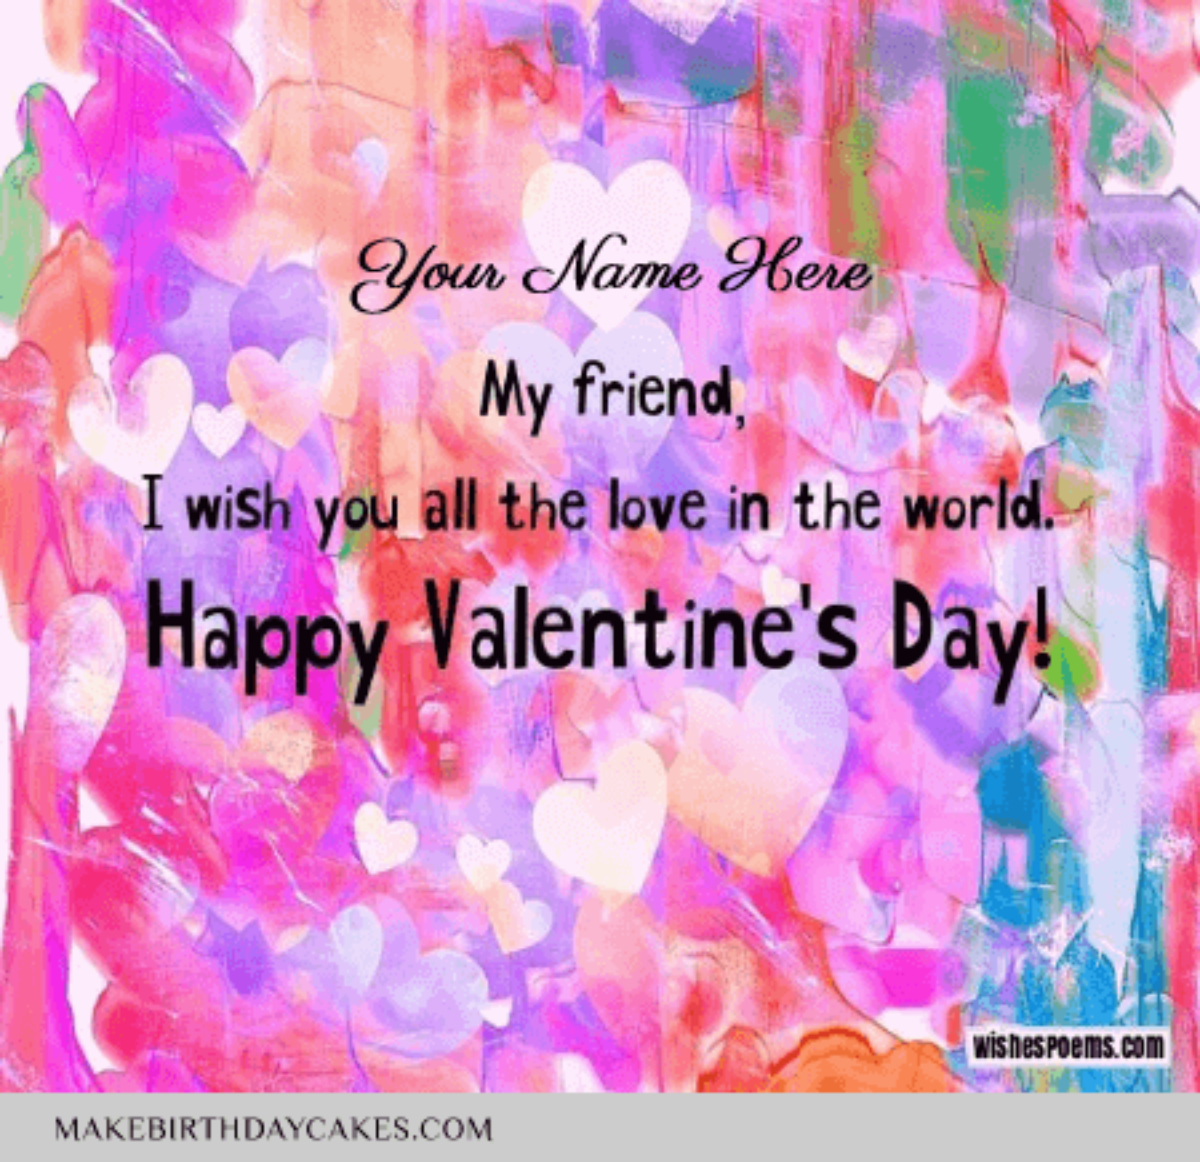 Valentine's Day Wish for friends - Lovely Valentine's Day Wish